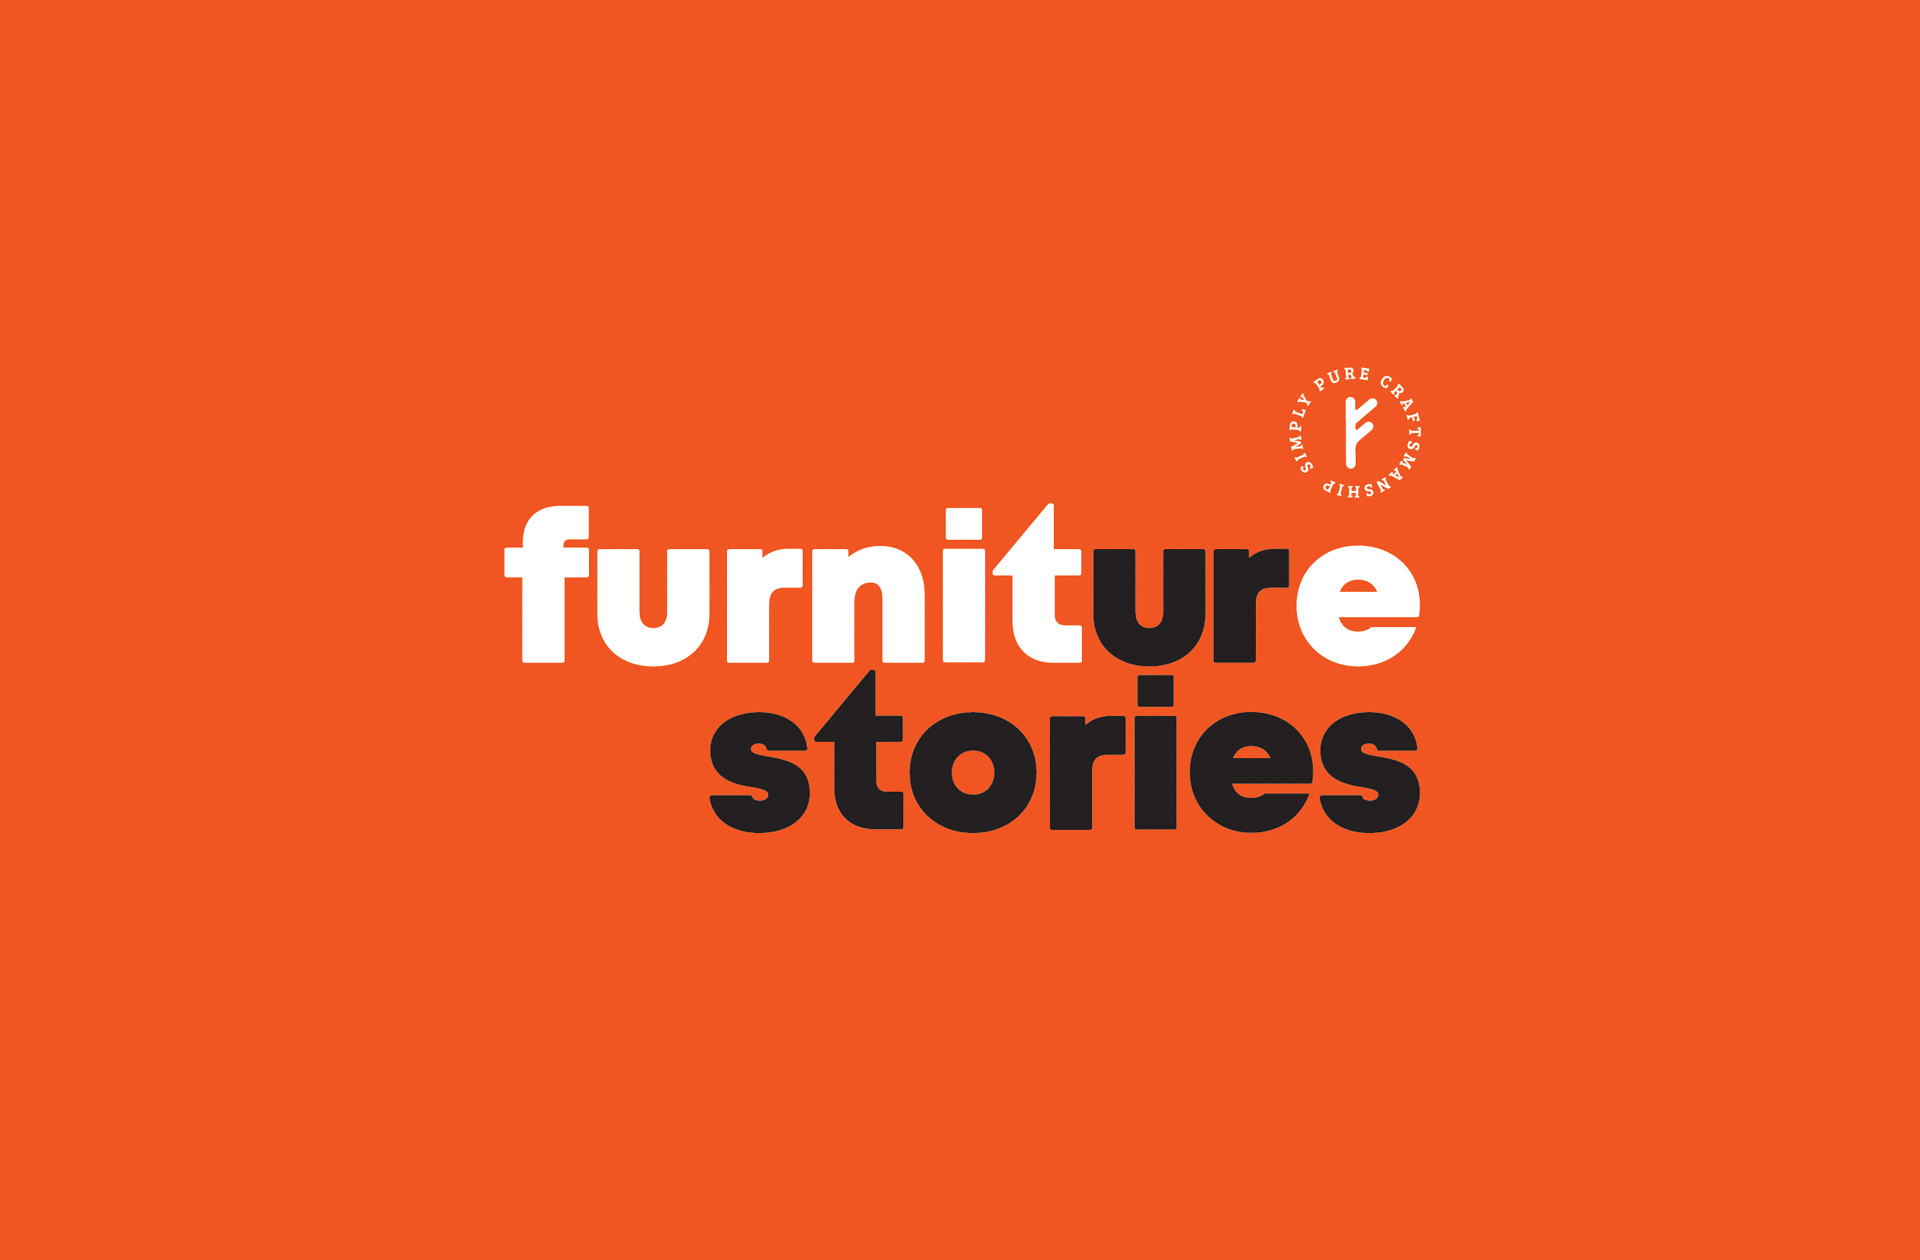 Furniture Stories